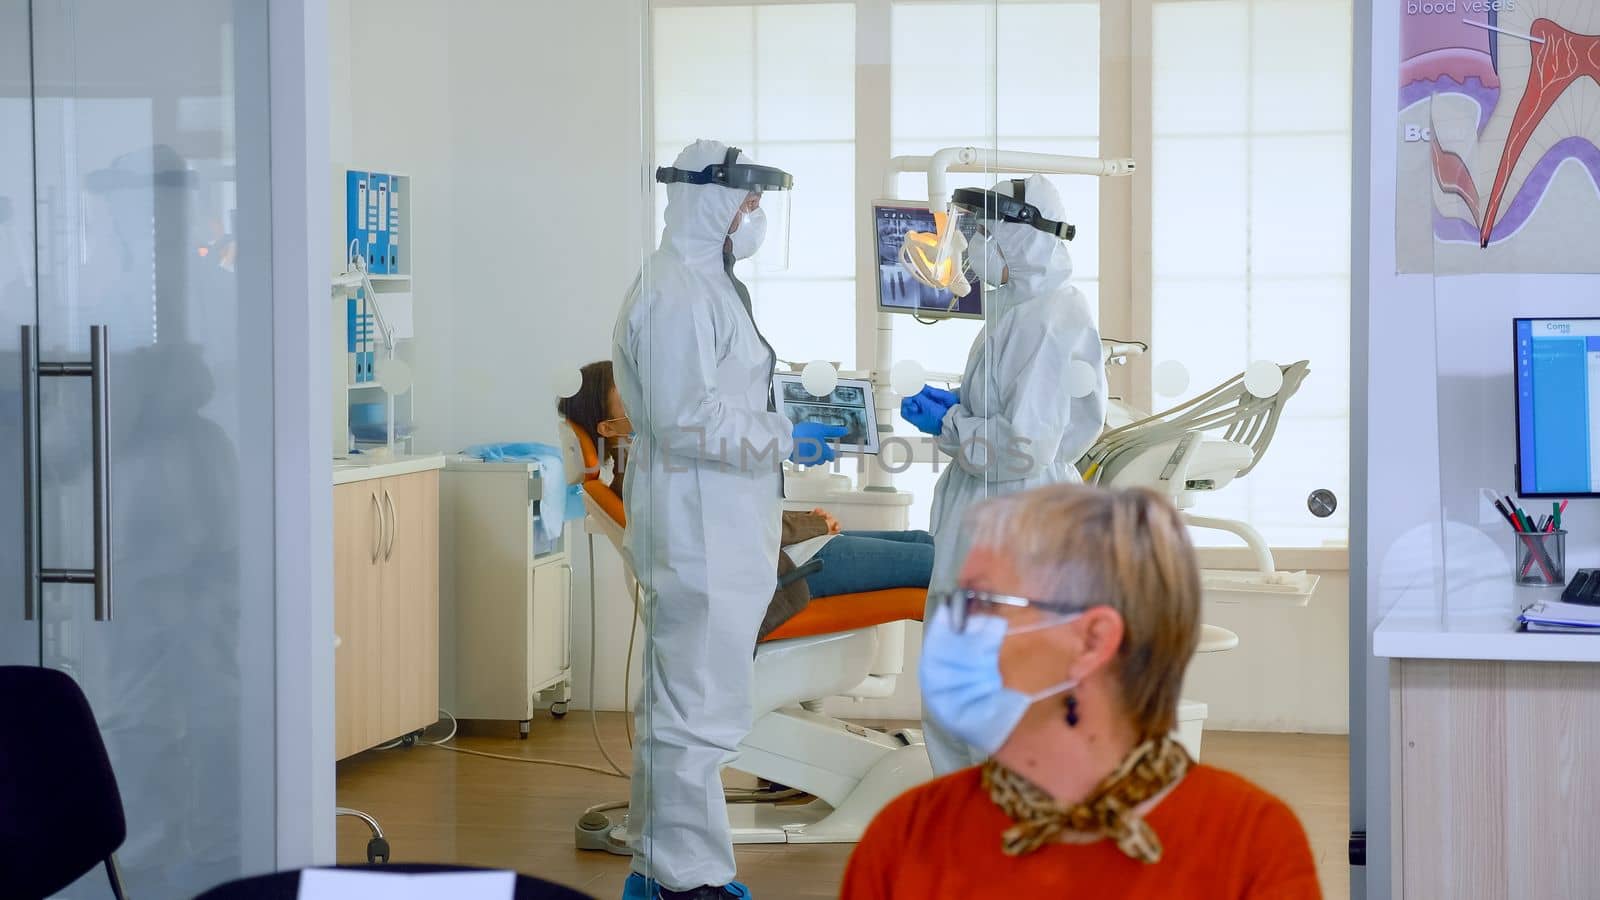 Doctors in full virus protection uniform talking in surgery room by DCStudio